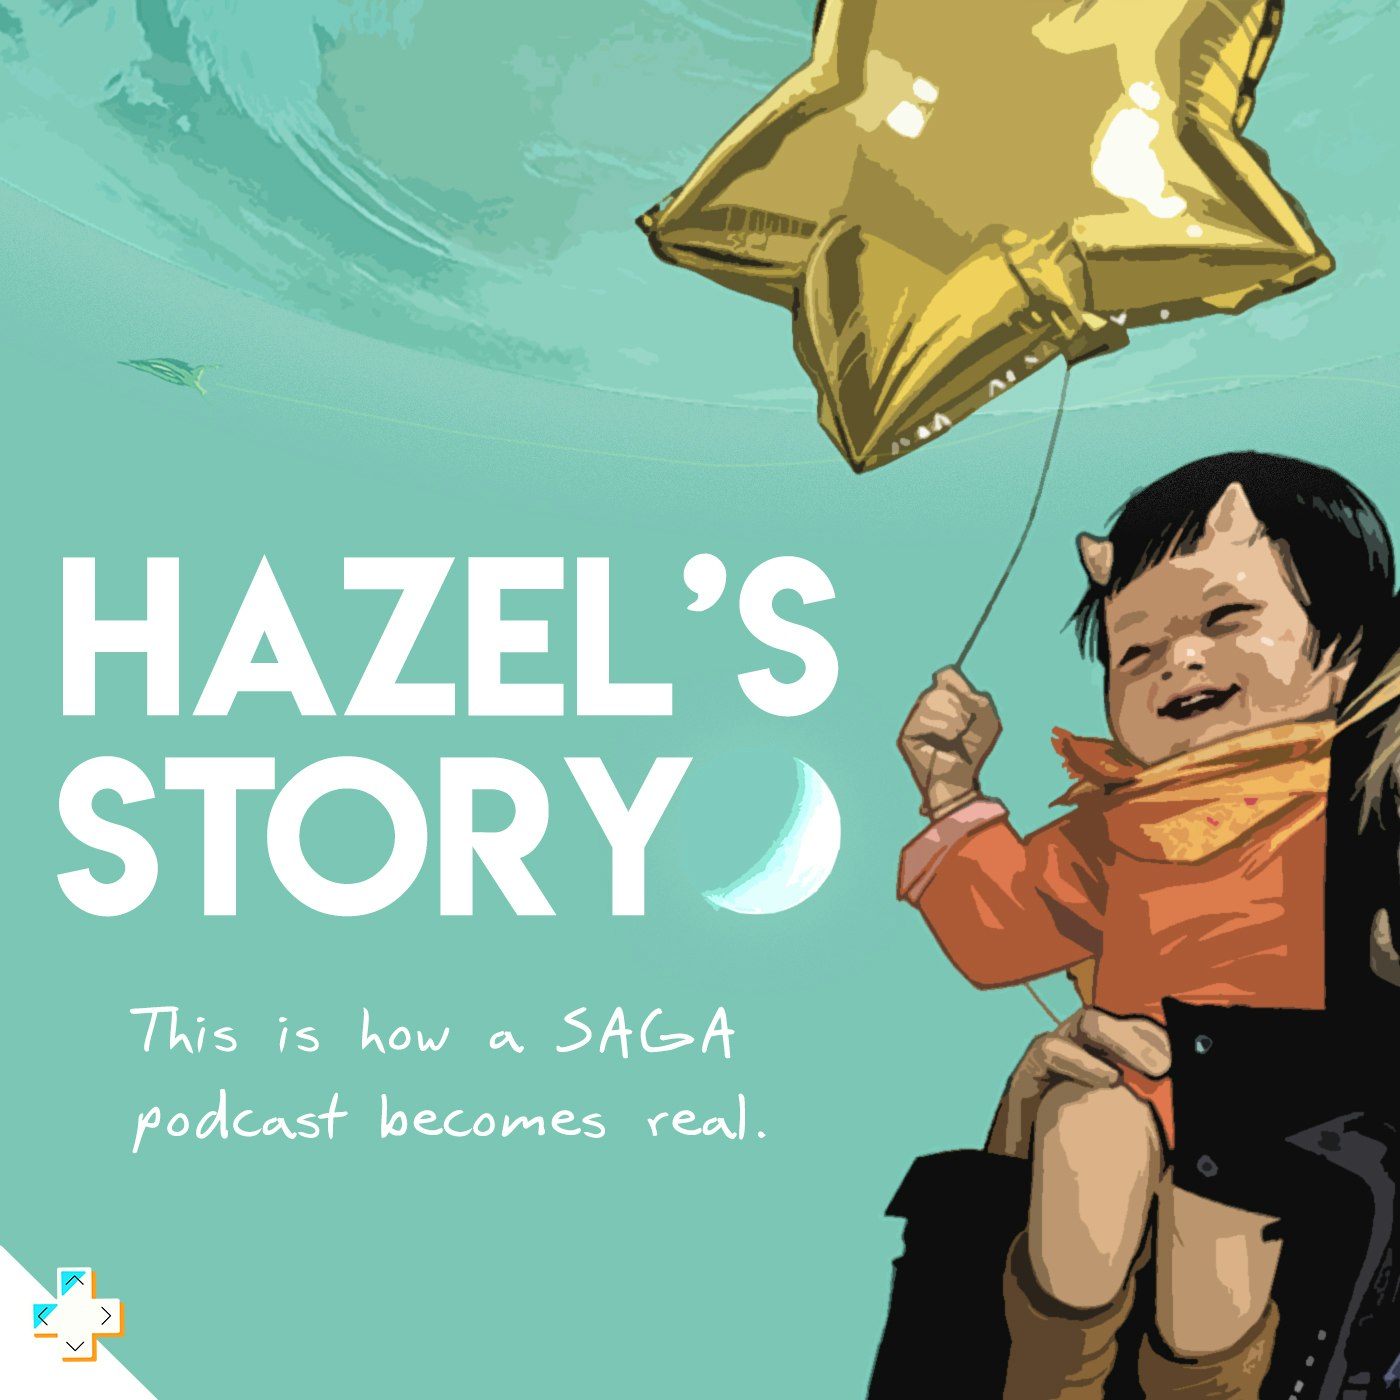 Introducing Hazel’s Story